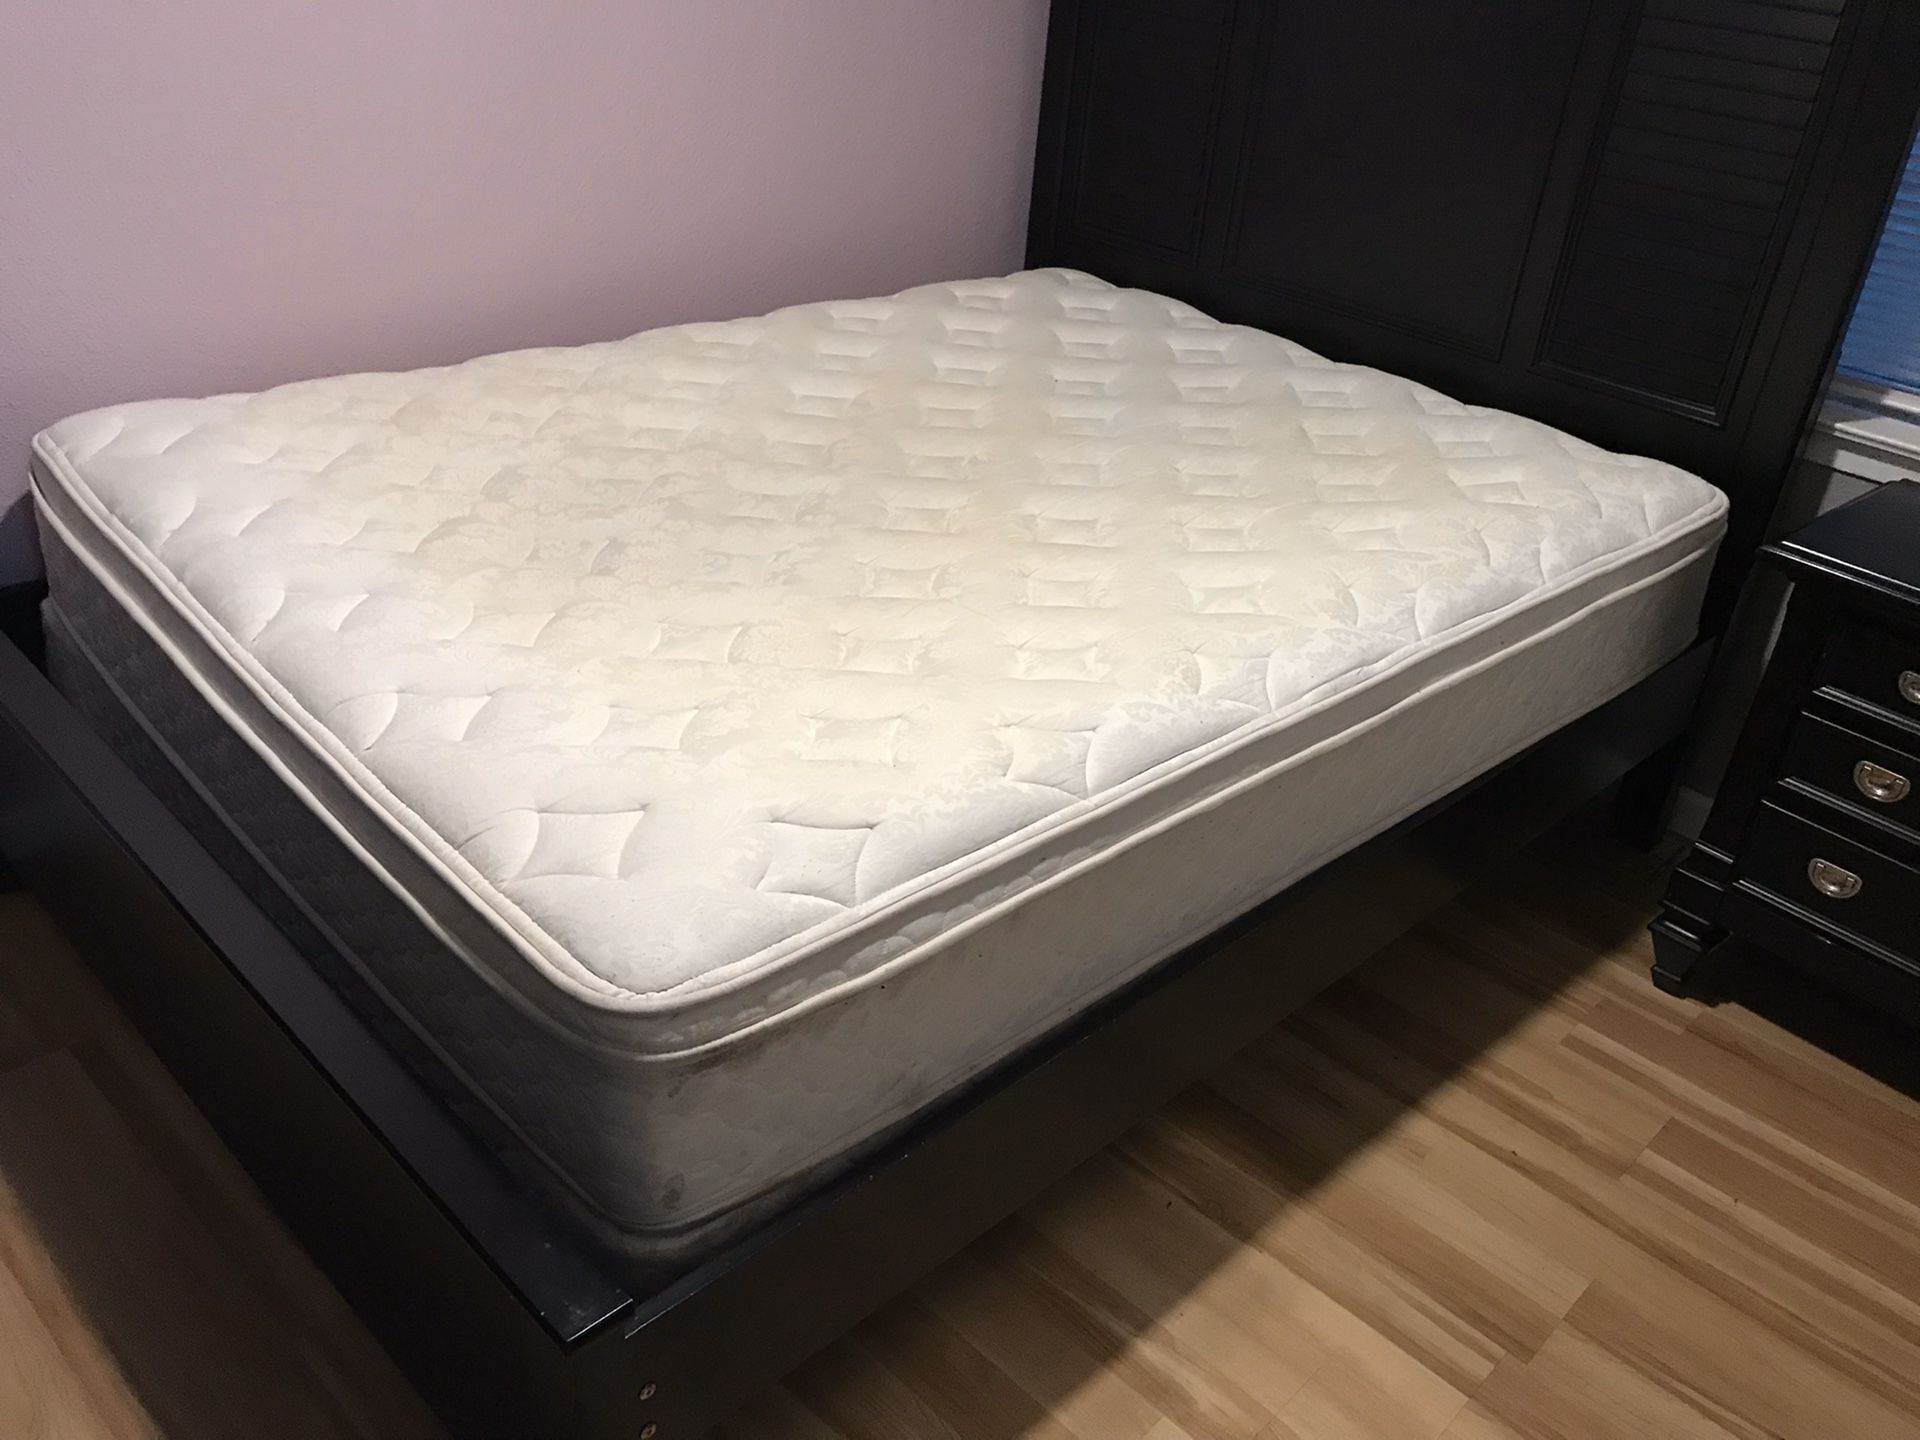 Belmar Queen bed from rooms to go, includes mattress.